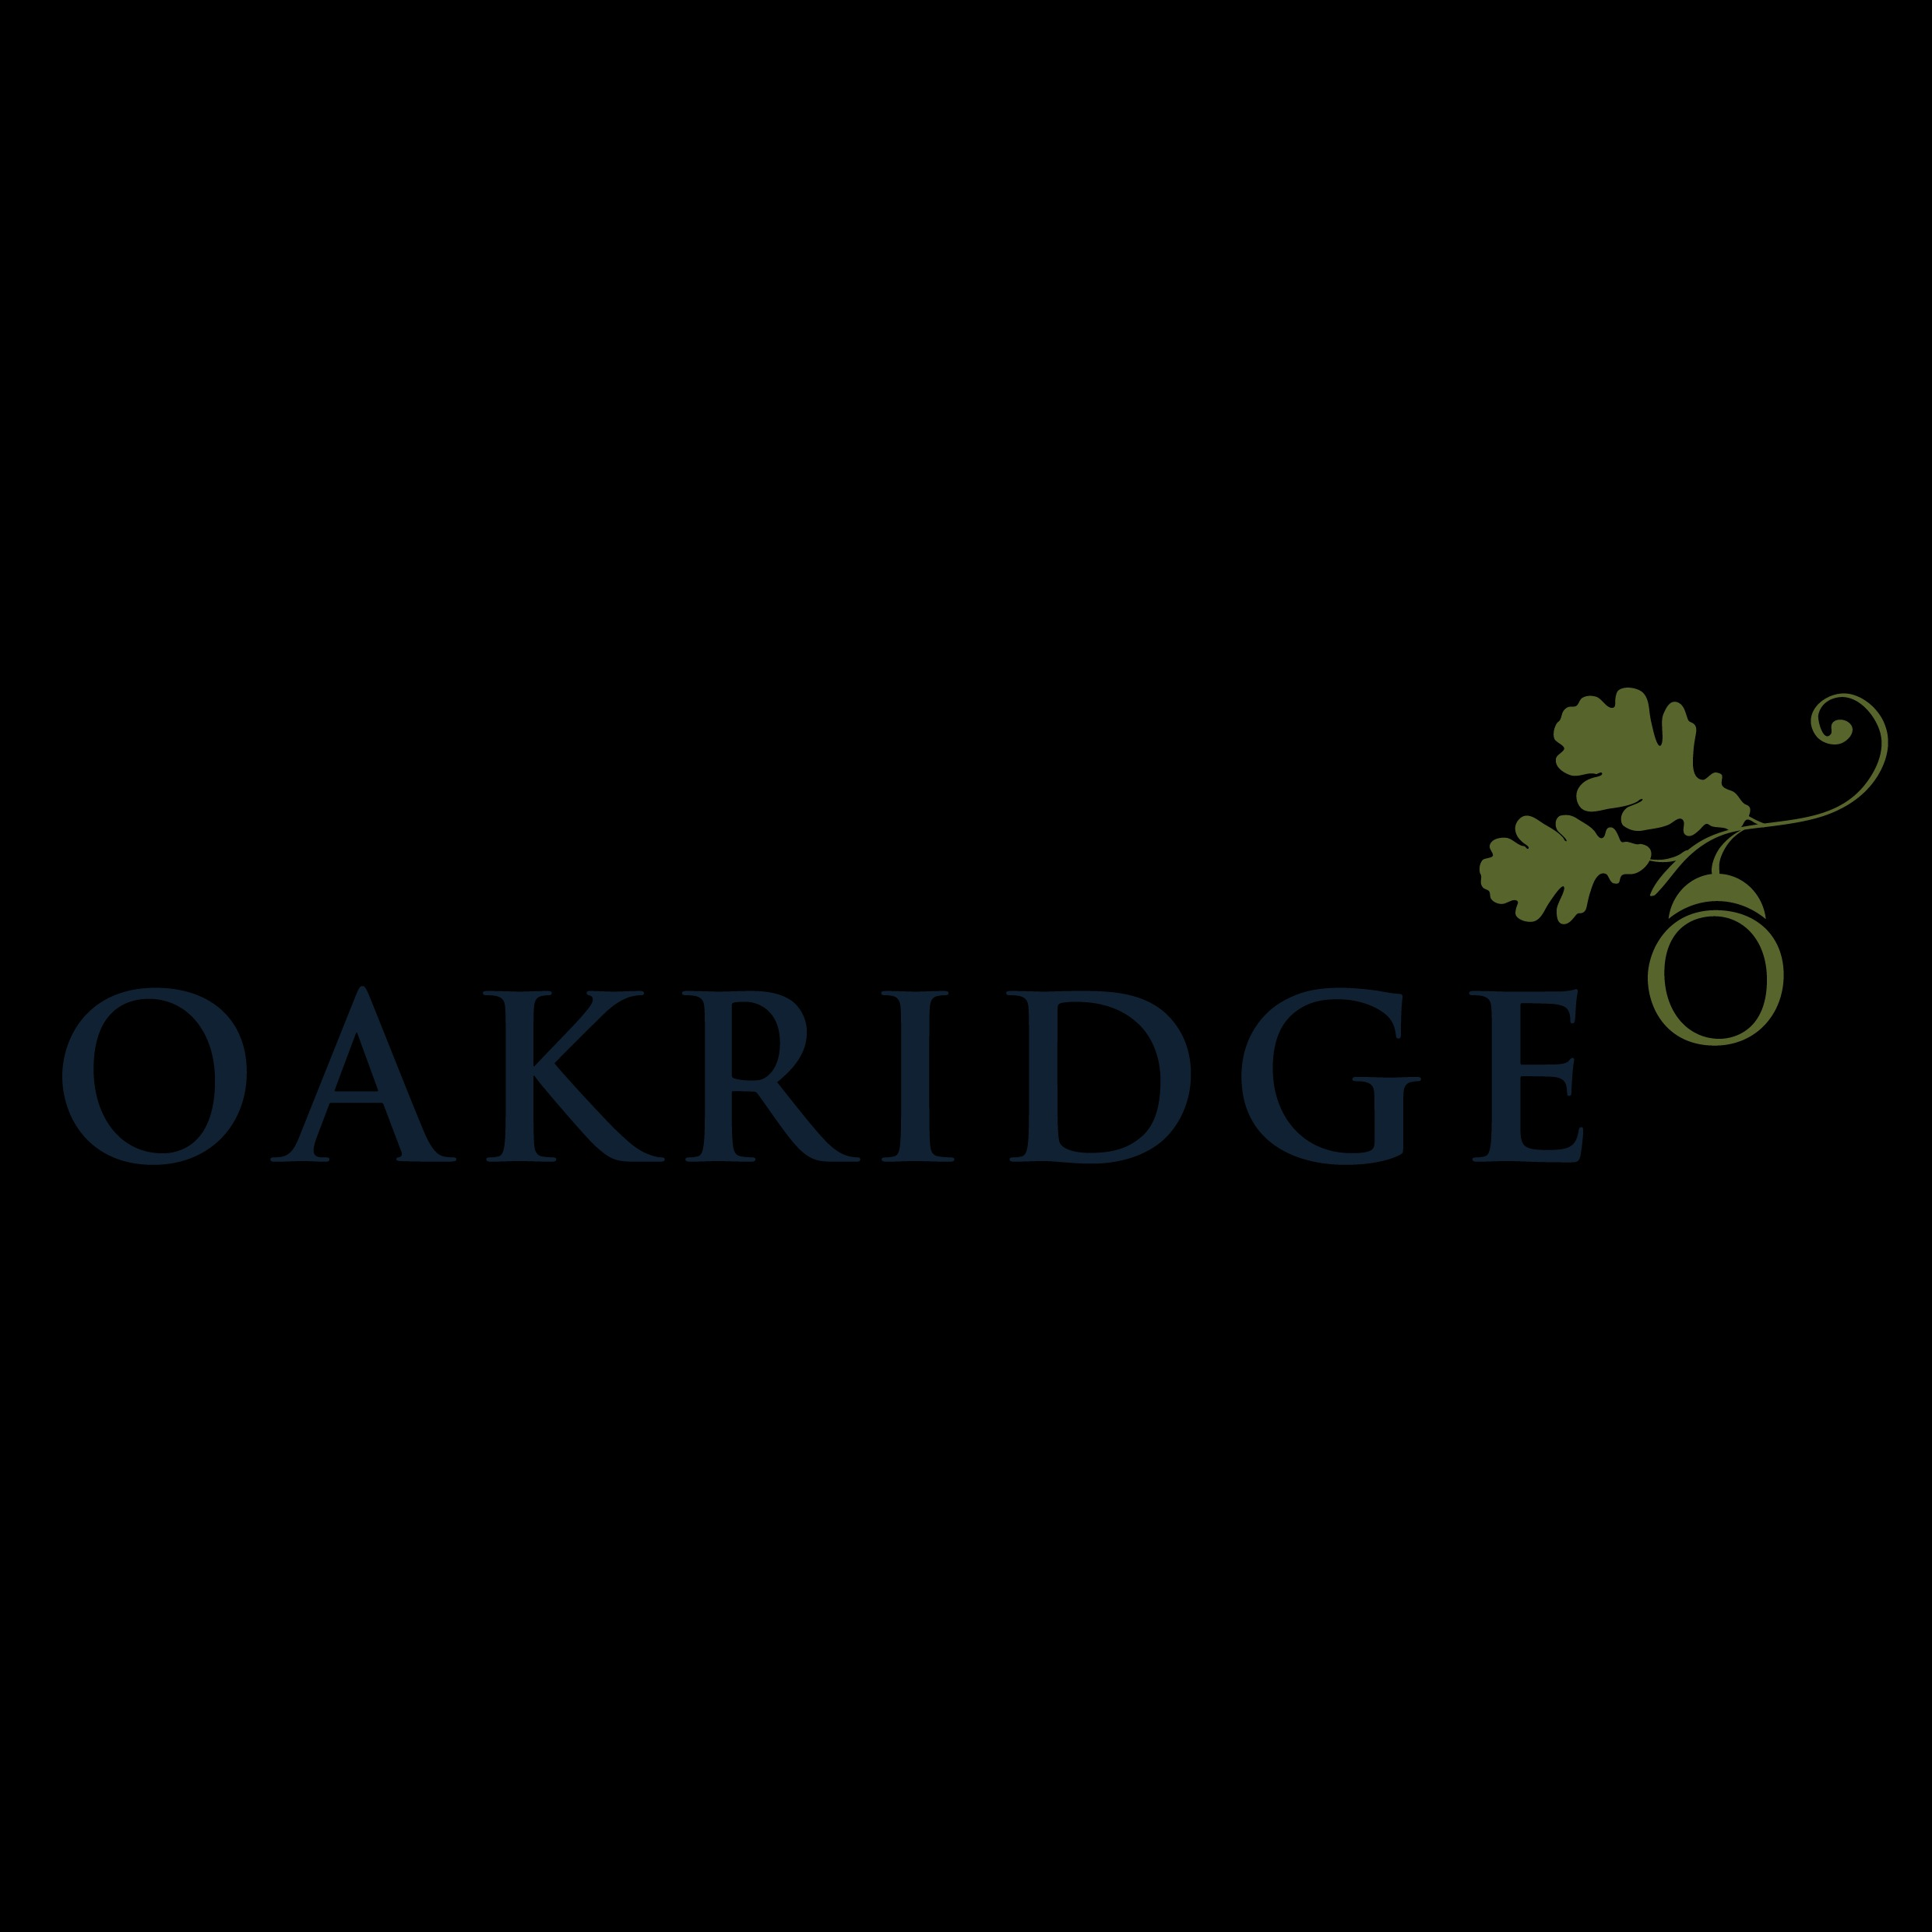 Oakridge Wines - Coldstream, VIC 3770 - (03) 9738 9900 | ShowMeLocal.com